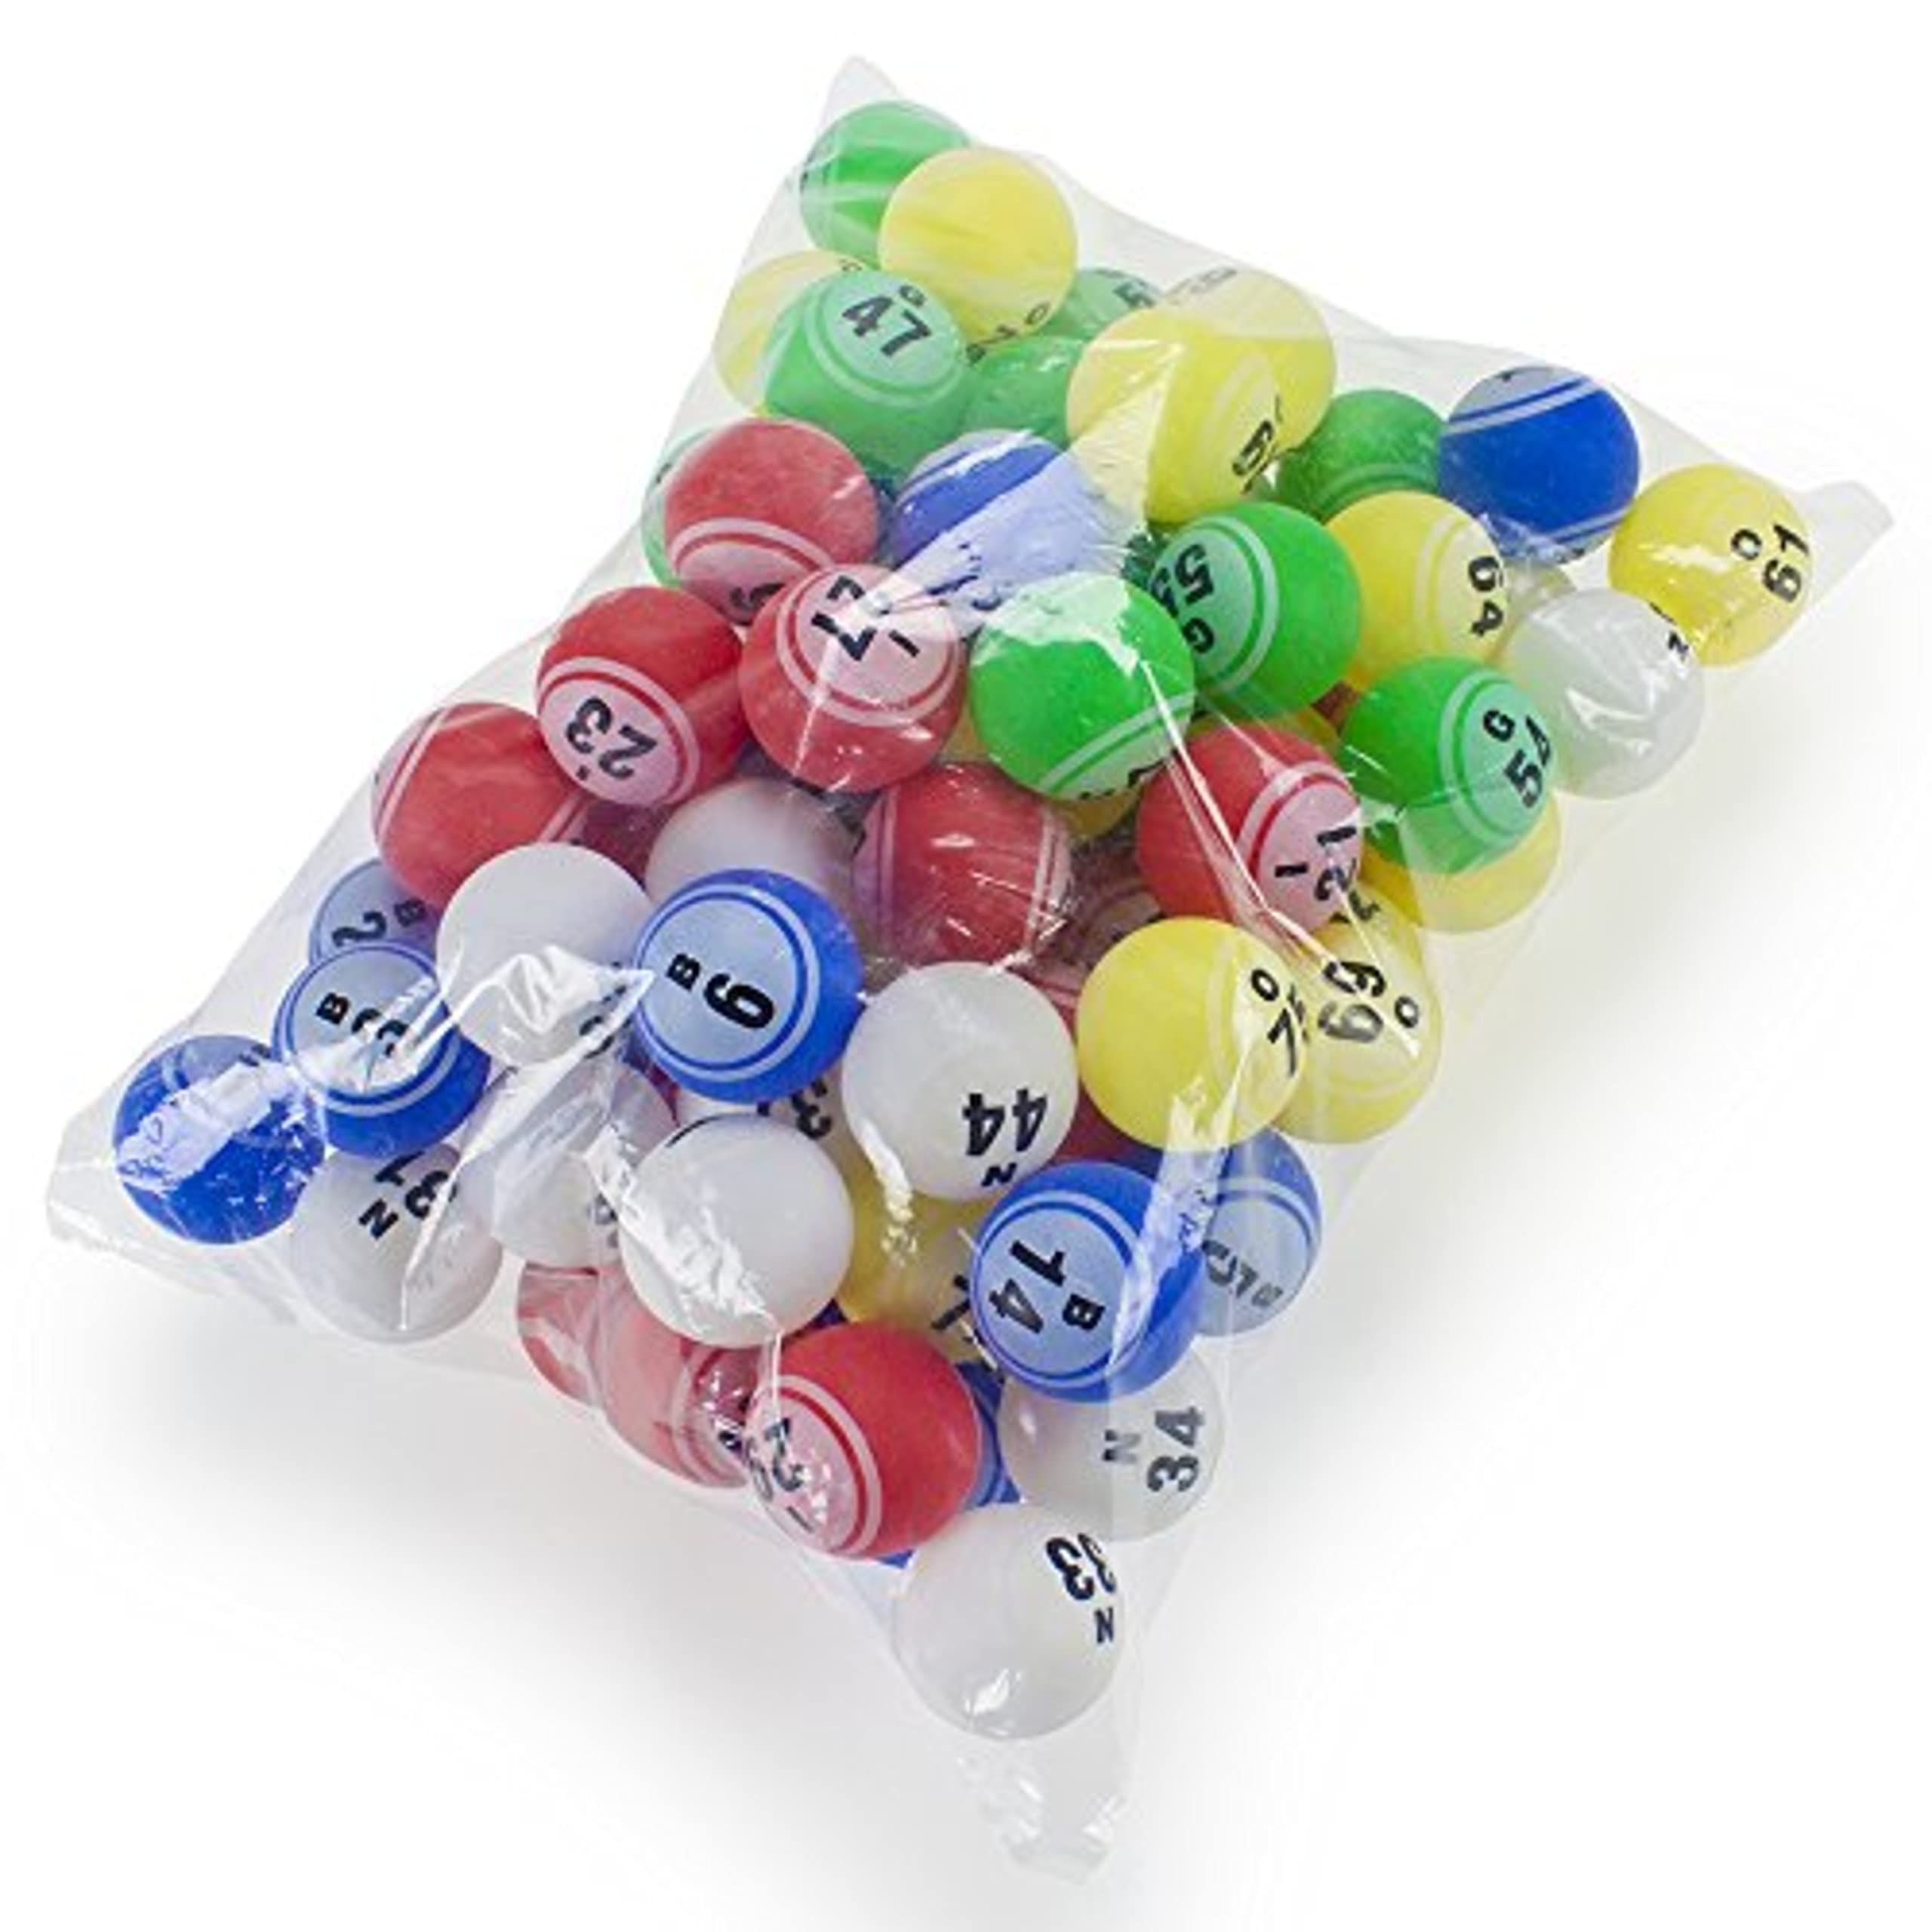 Professional 1.5-inch Bingo Balls Replacement Set